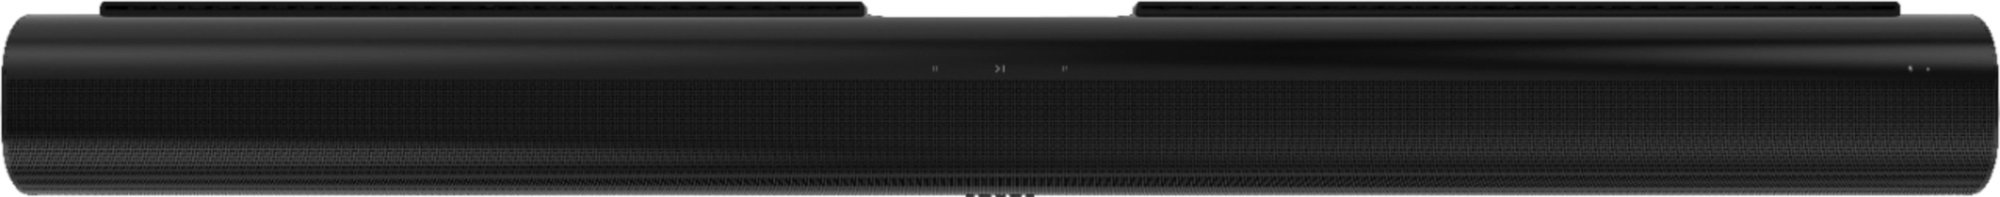 Sonos - Arc Soundbar with Dolby Atmos, Google Assistant and Amazon Alexa - Black-Black